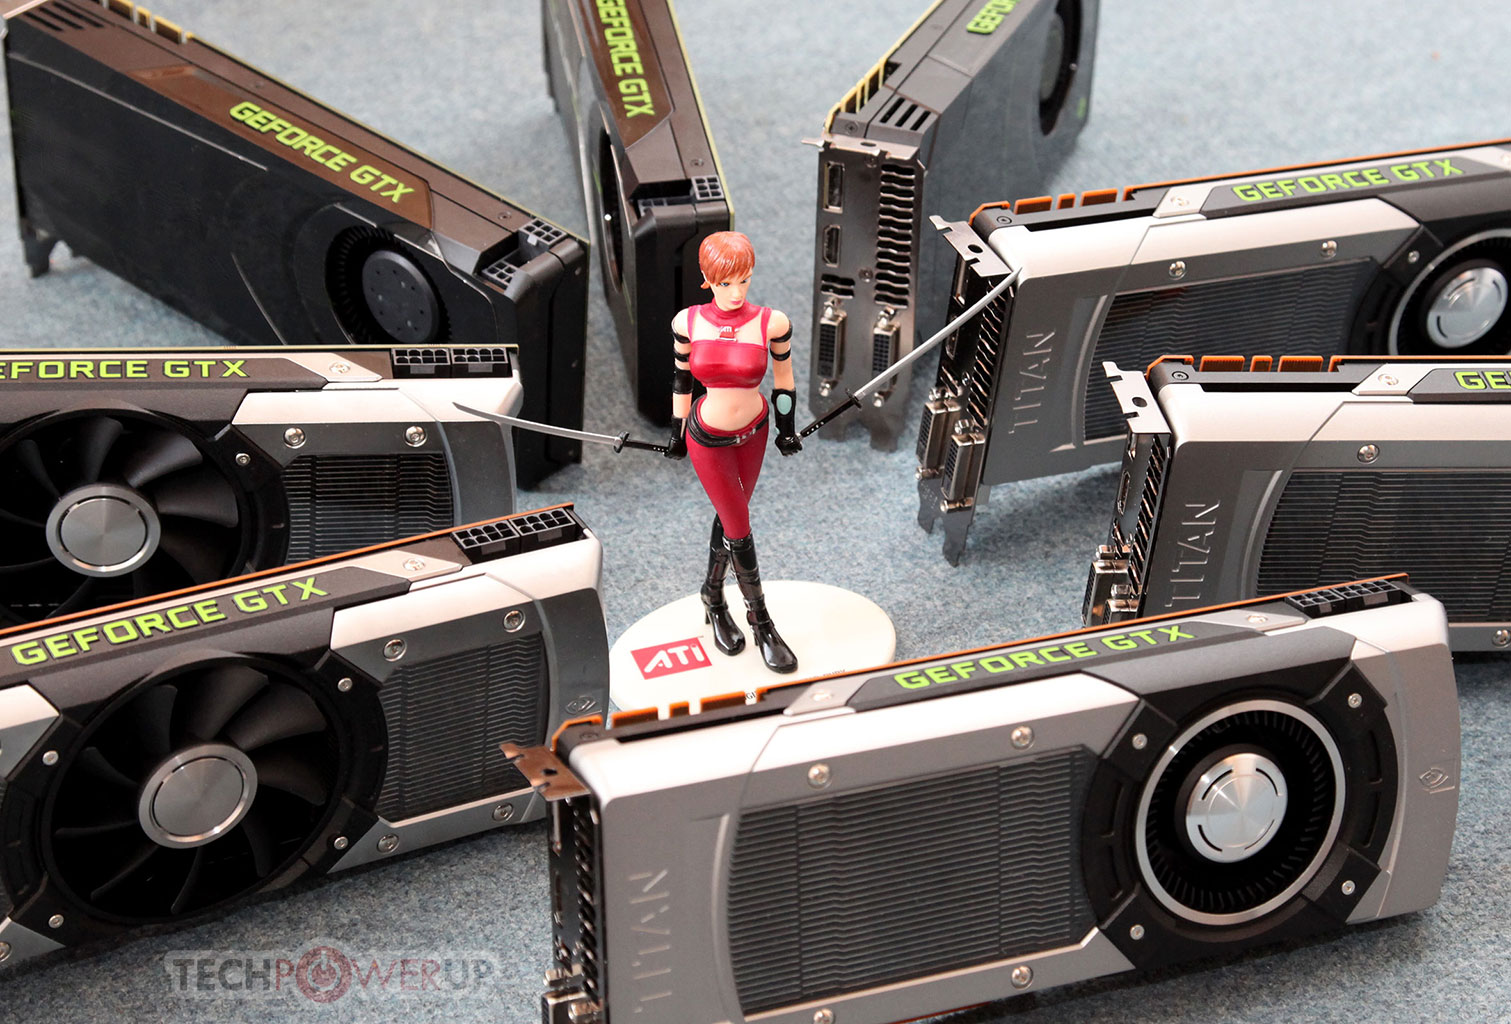 GPU Benchmarks: Metro2033 - Choosing a Gaming CPU: Single + Multi